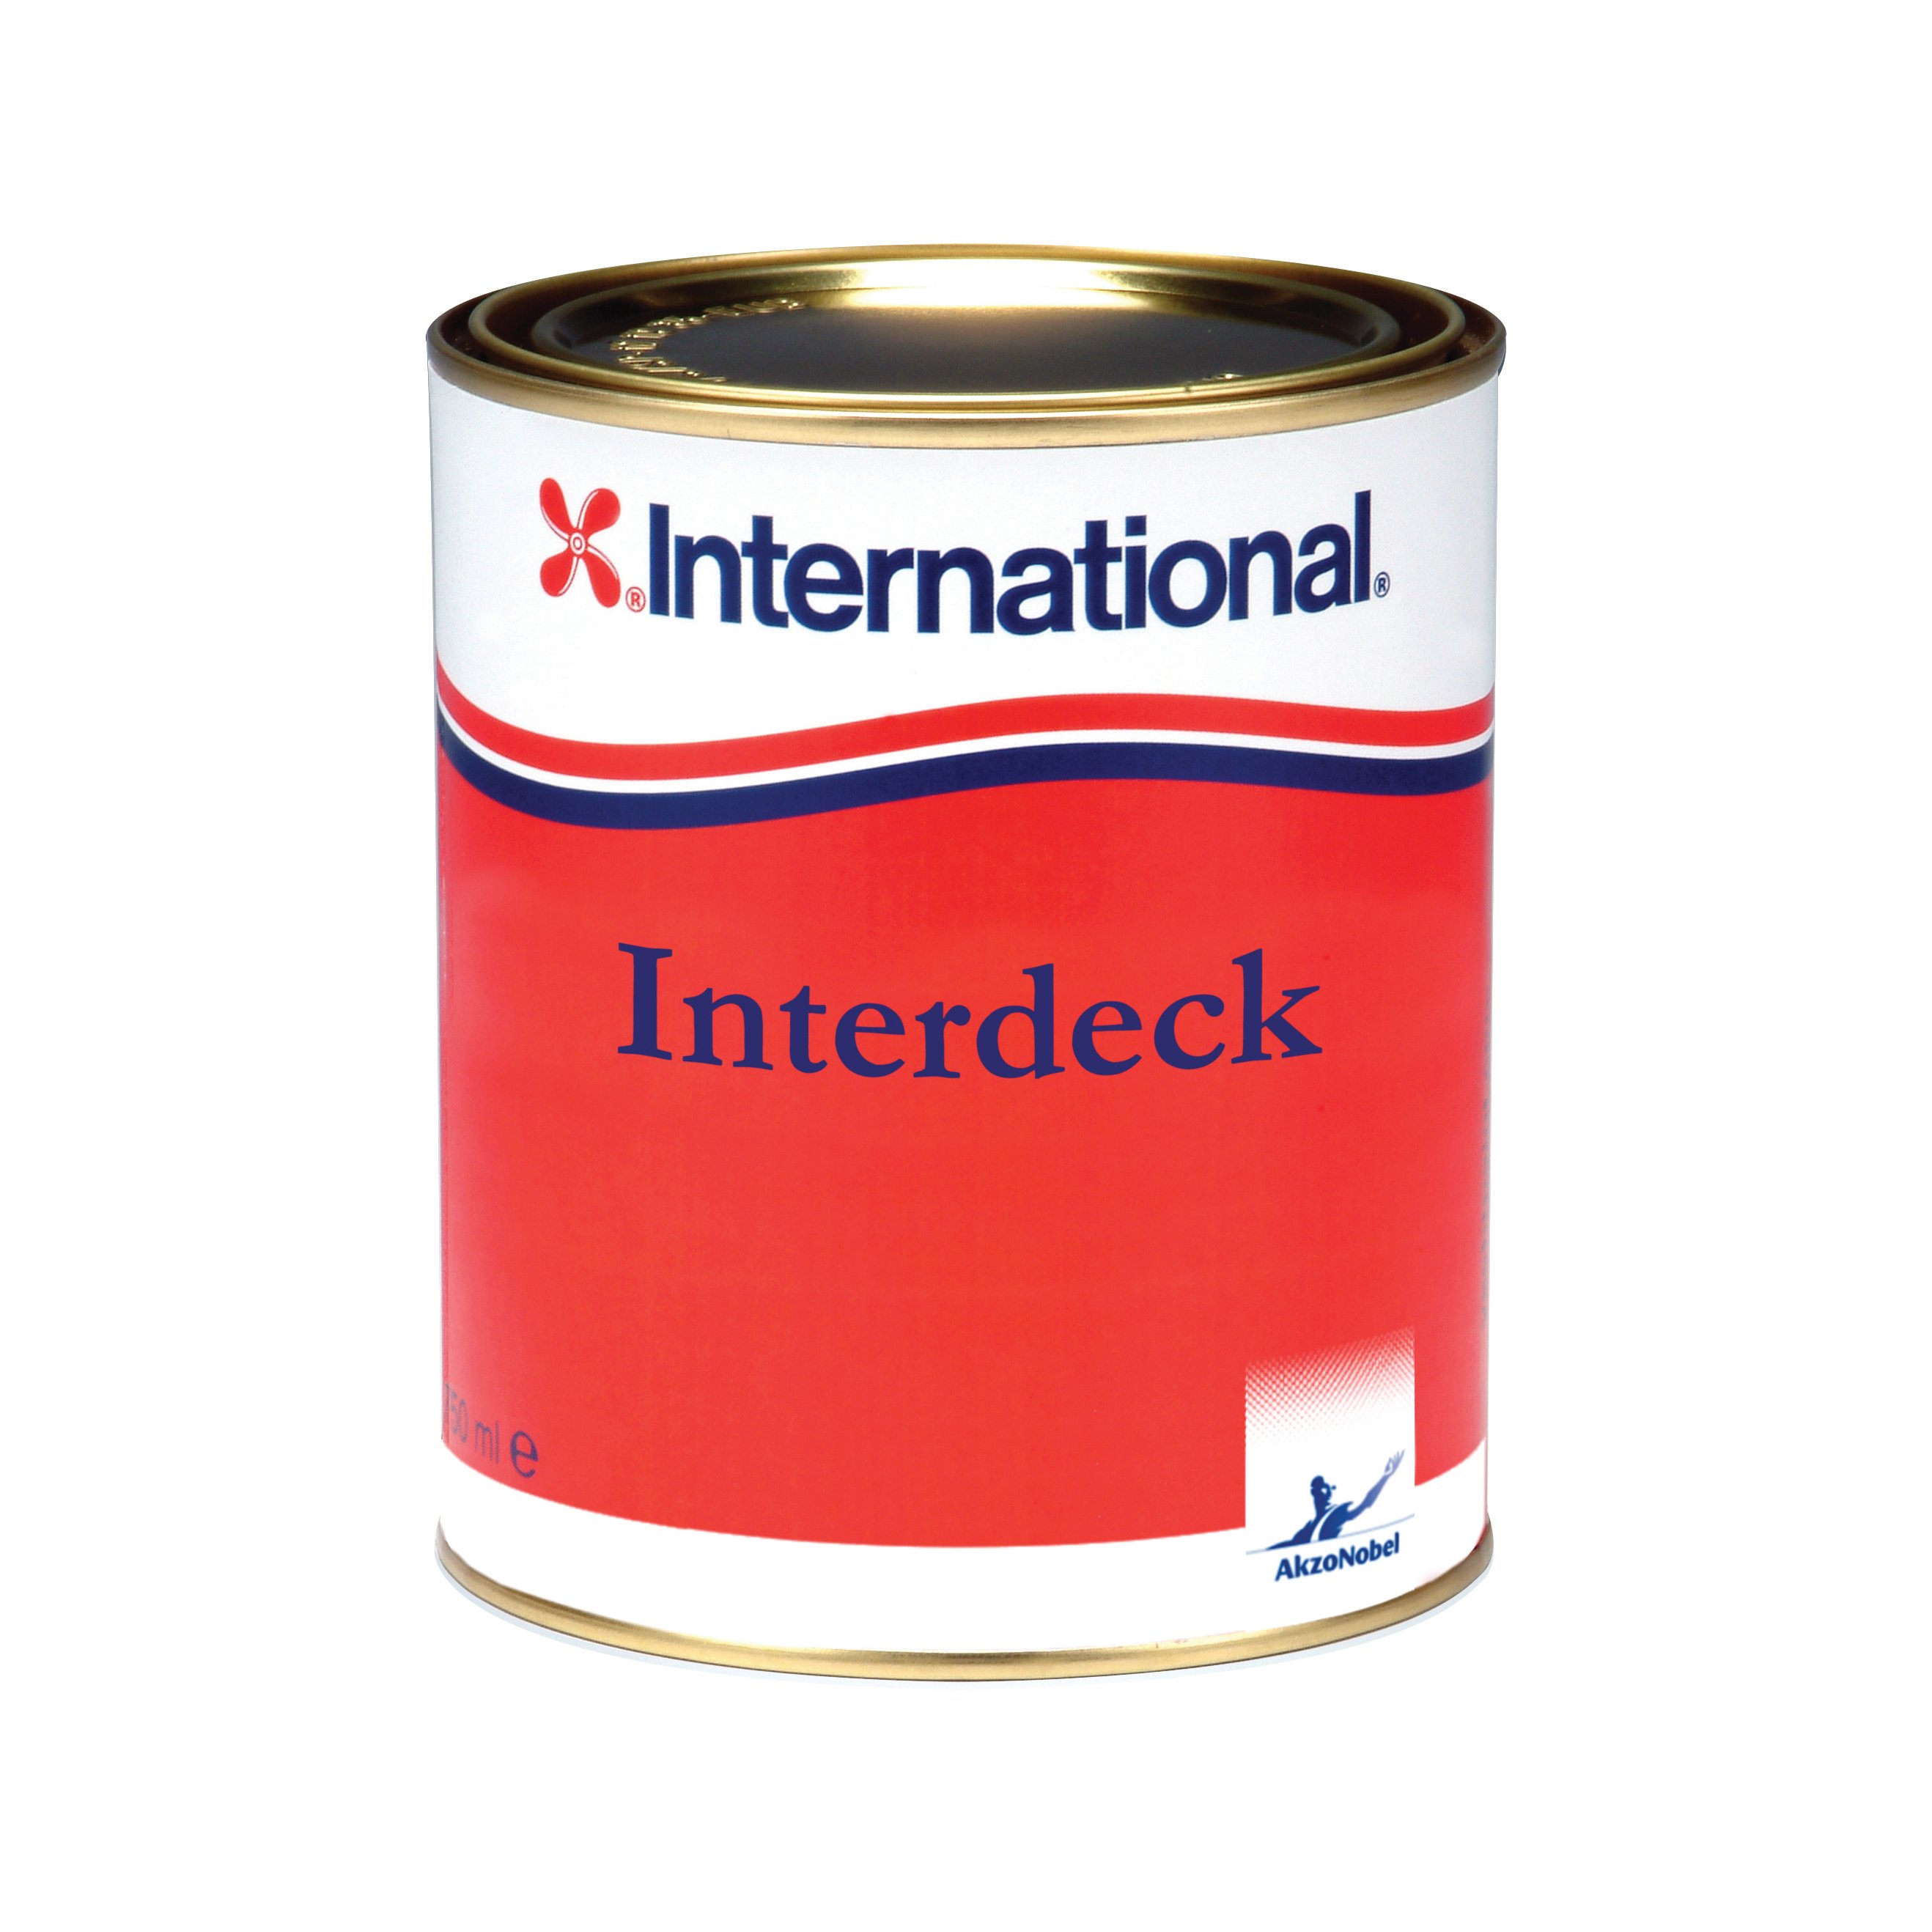 International Interdeck laque marine de finition - crème 027, 750ml